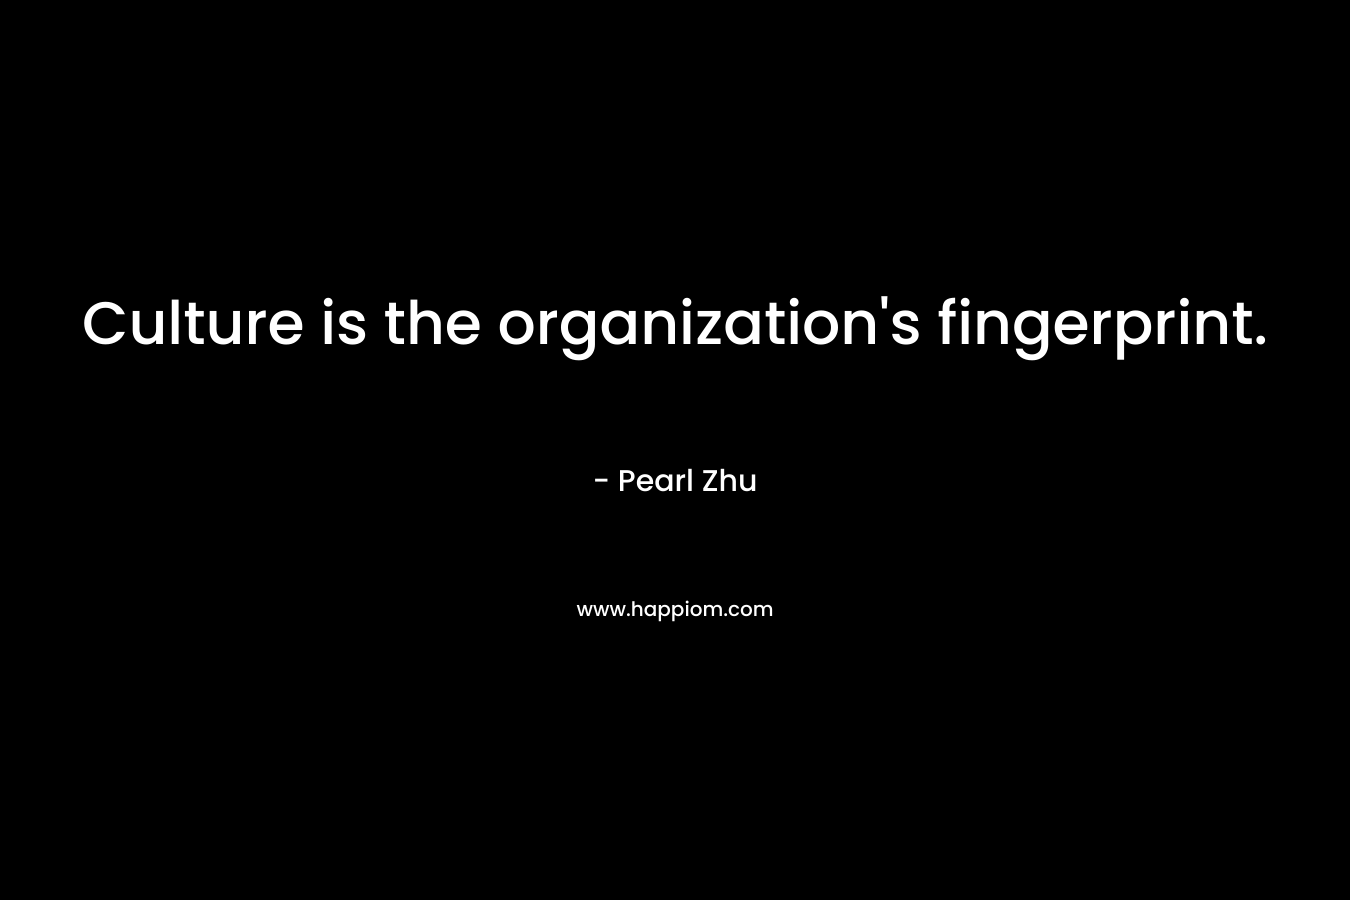 Culture is the organization's fingerprint.